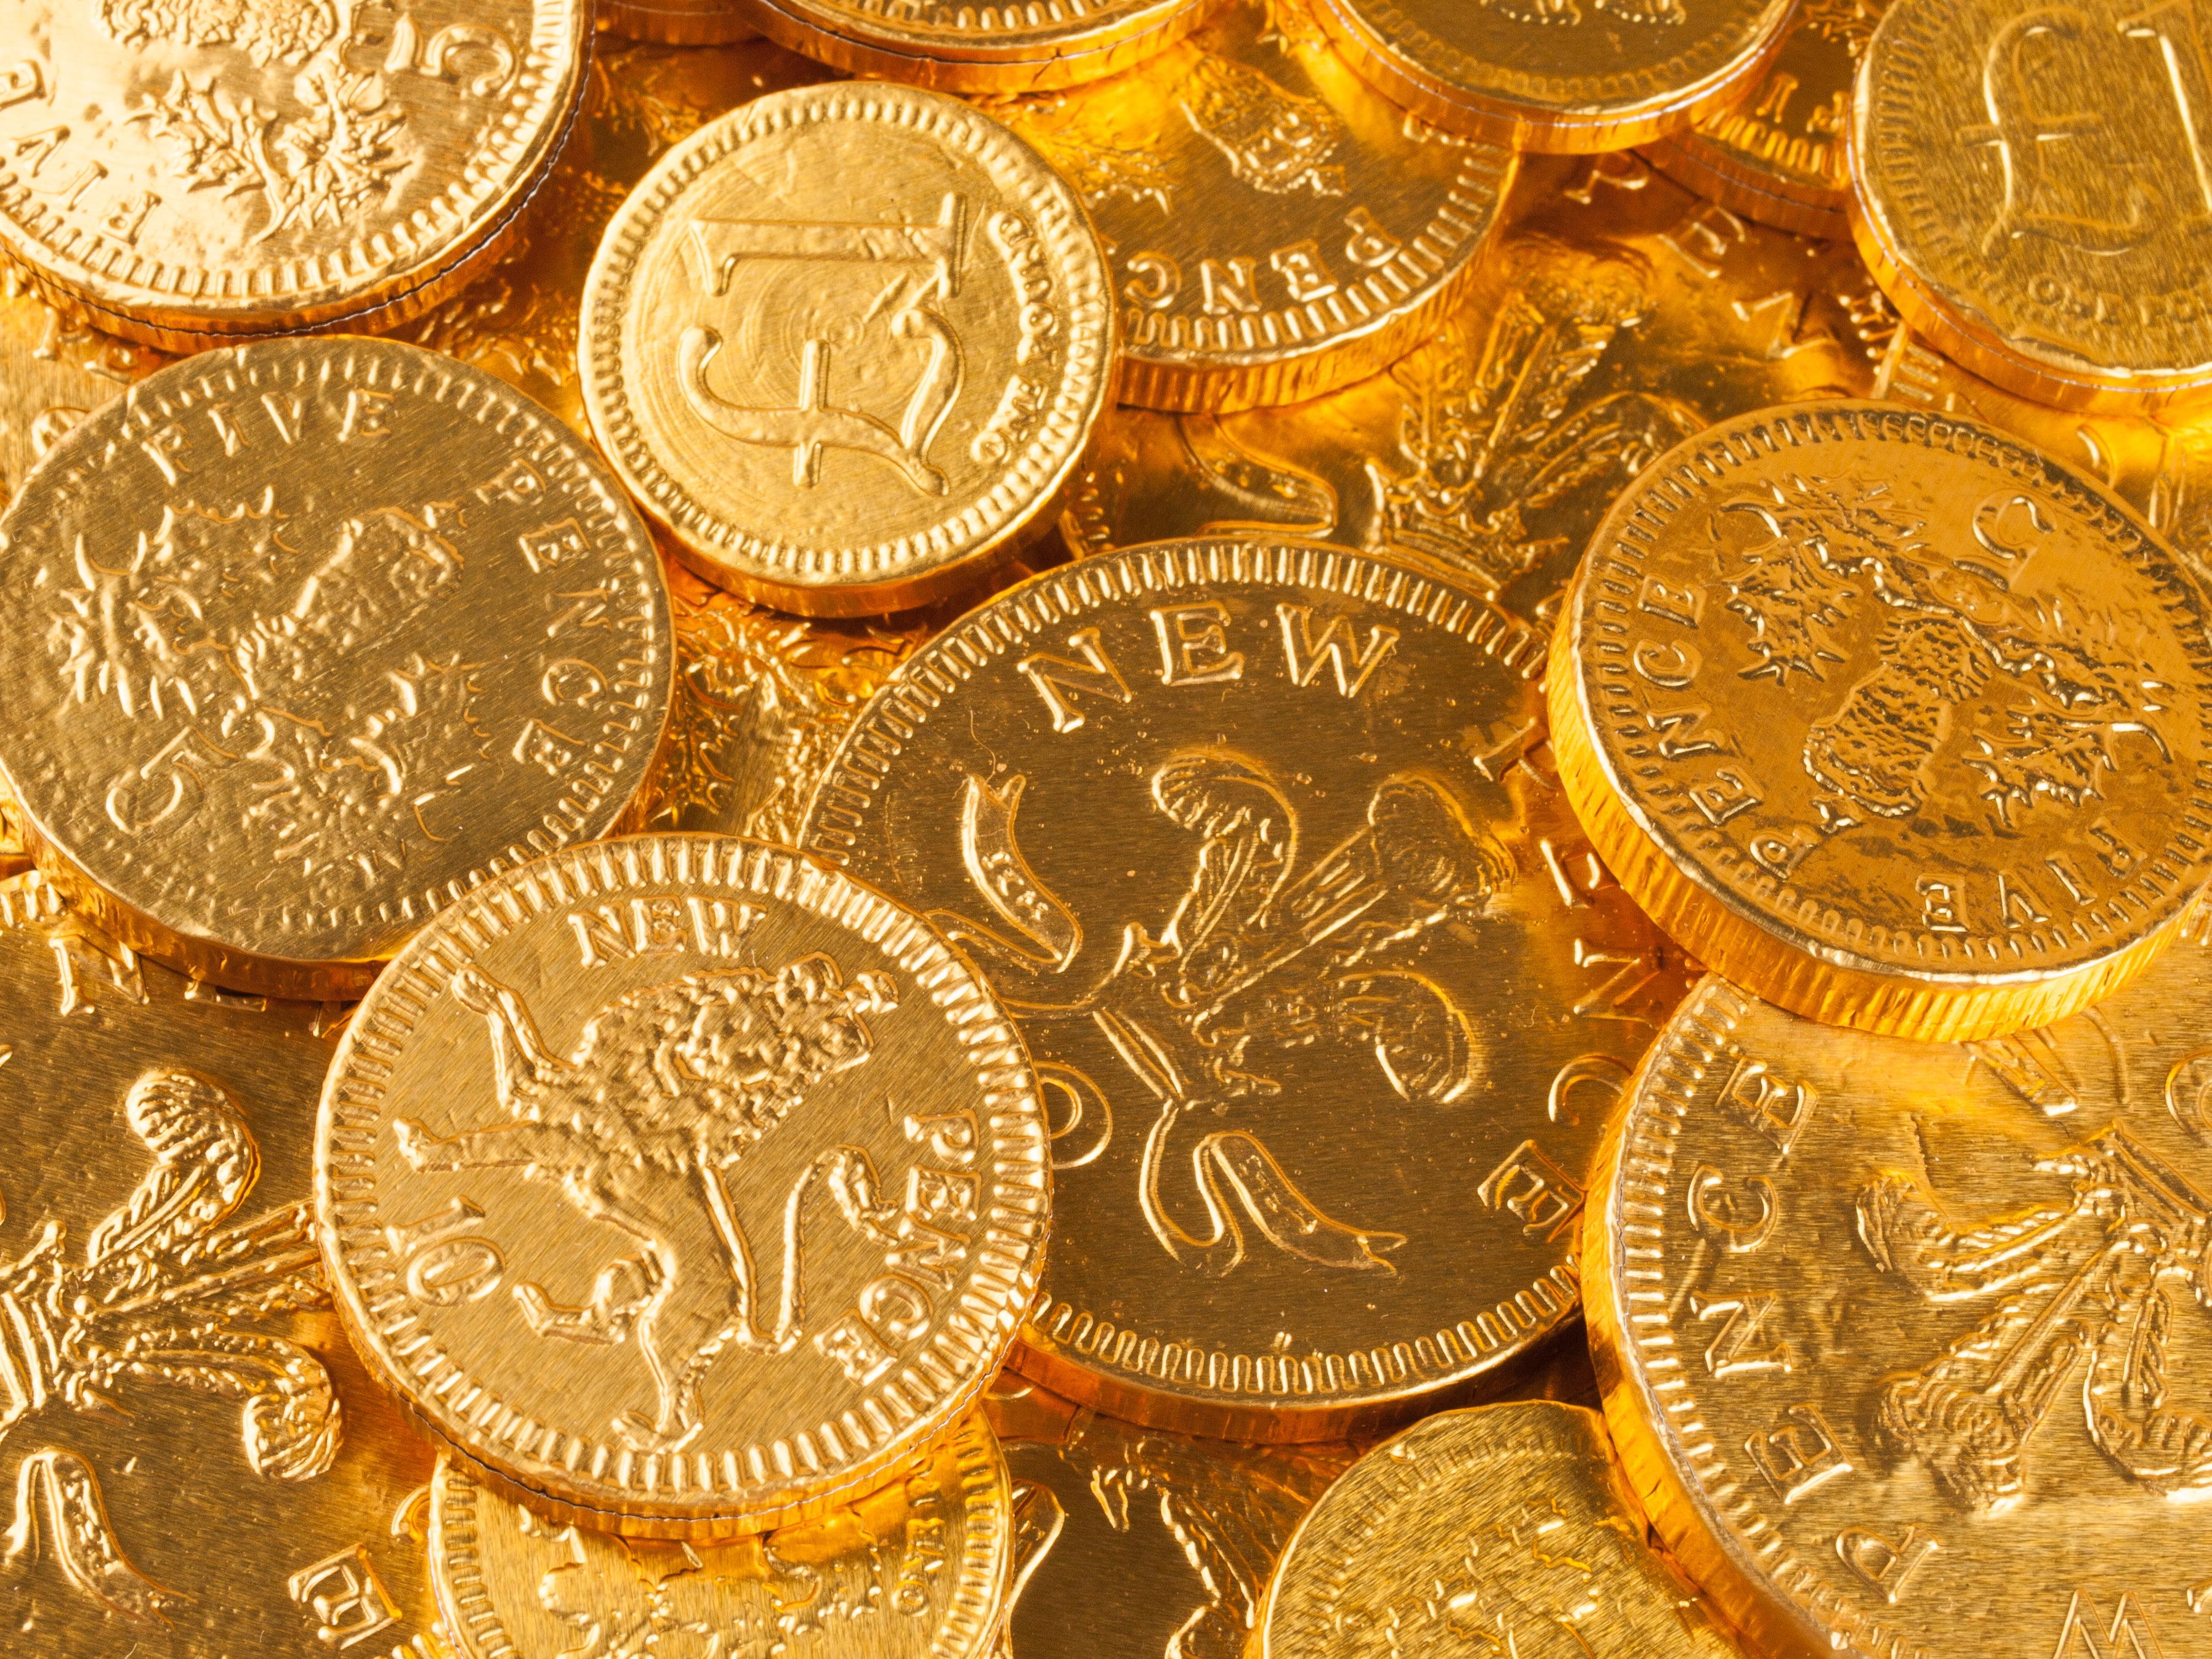 HD wallpaper: Money, copper round coins, cash, diverse